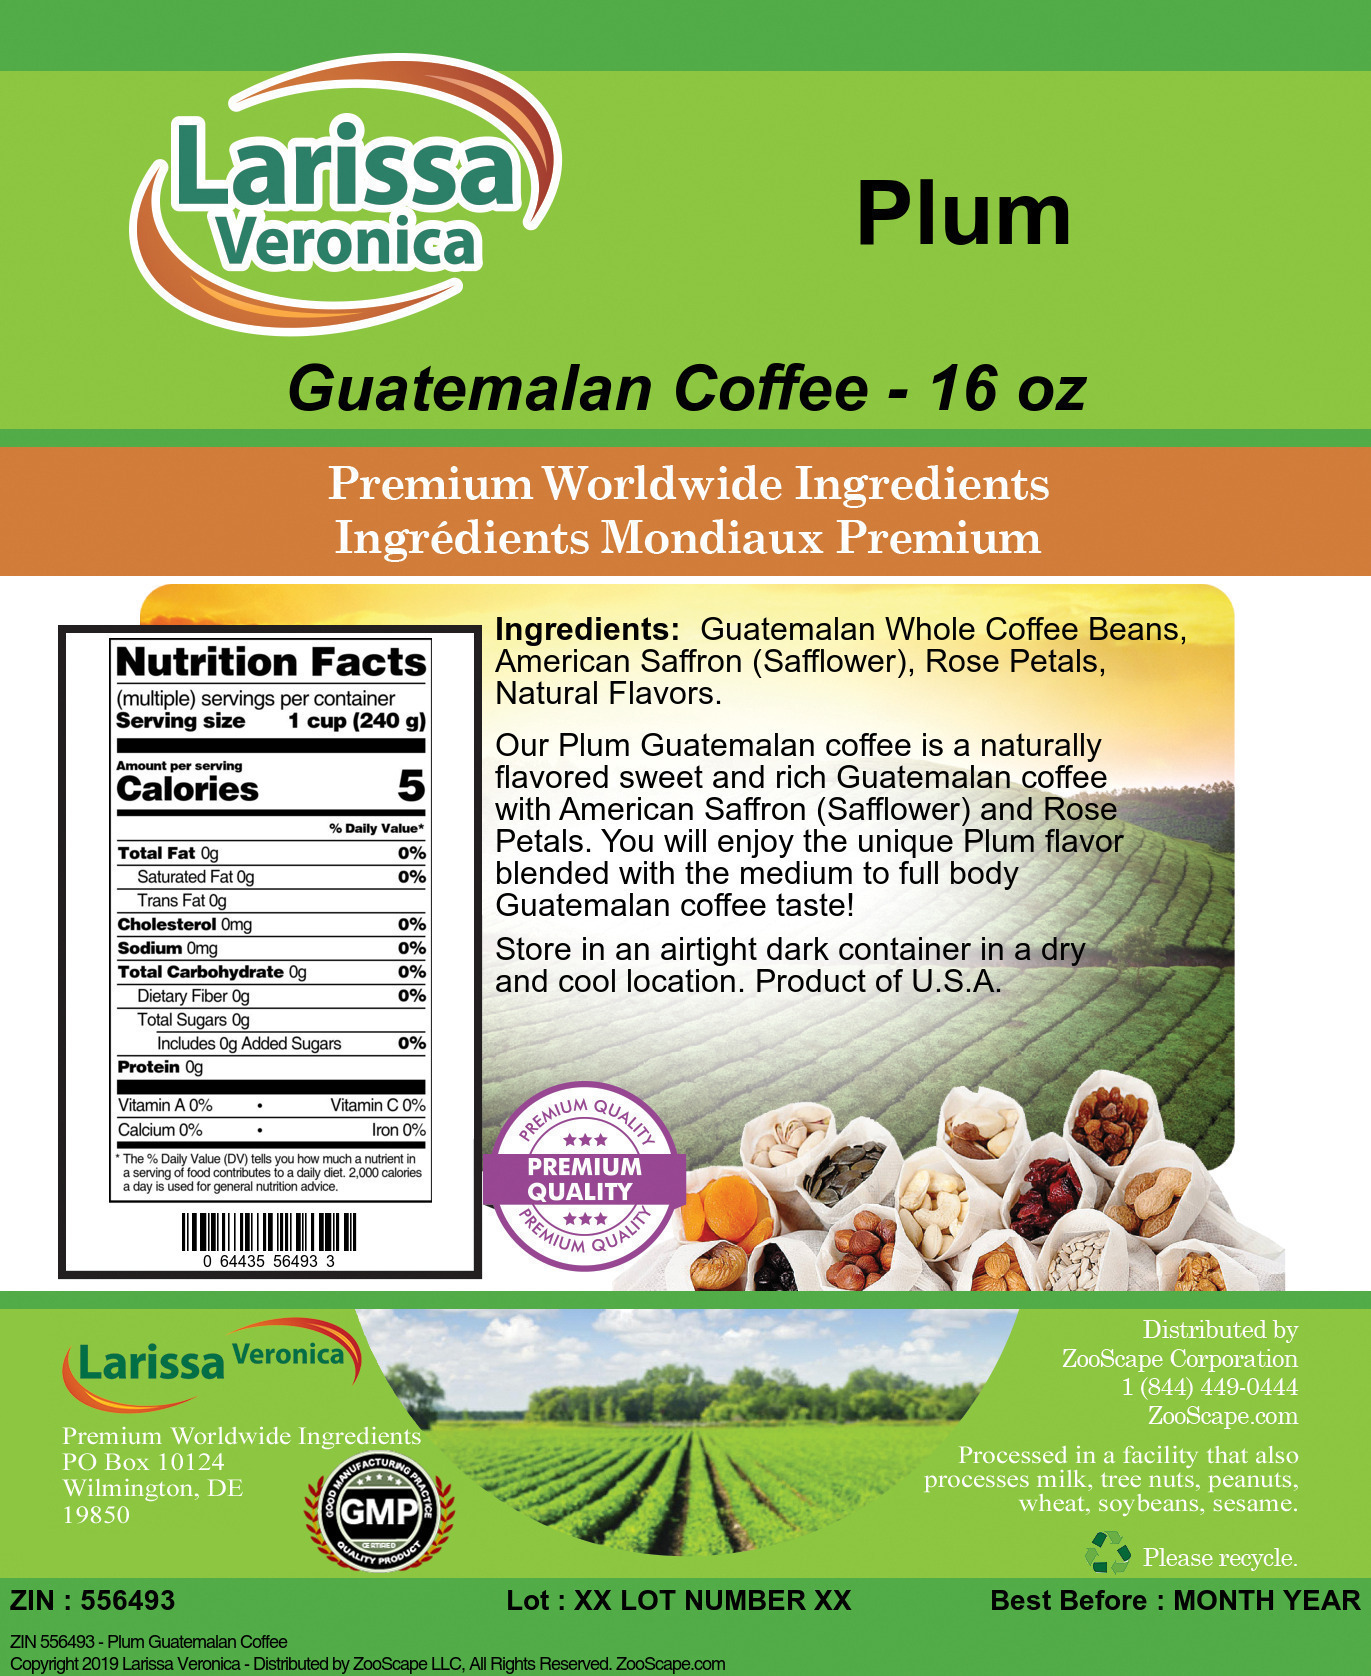 Plum Guatemalan Coffee - Label